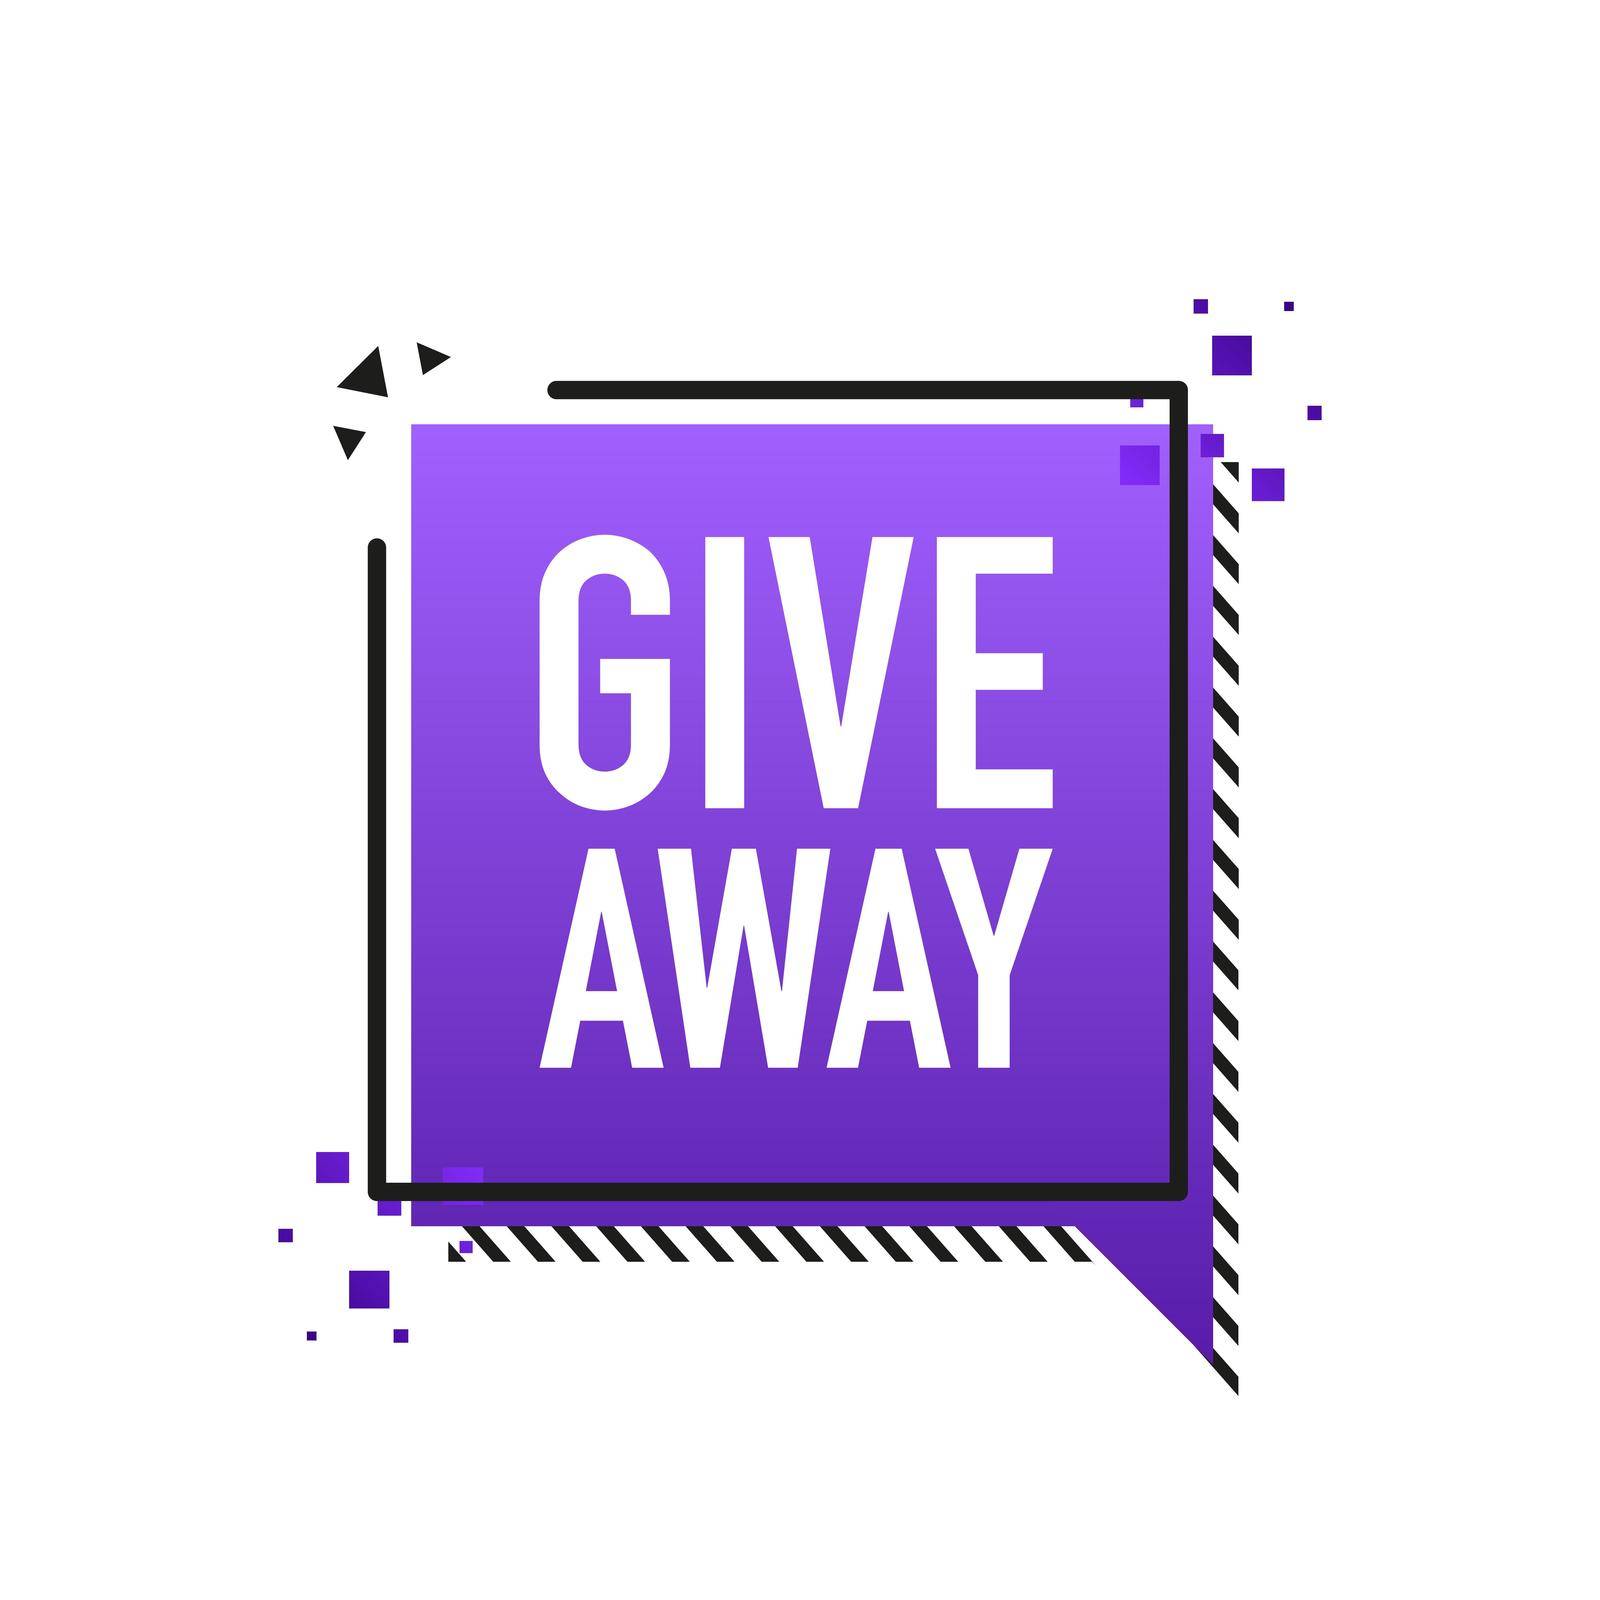 Giveaway logo template for social media post or website banner